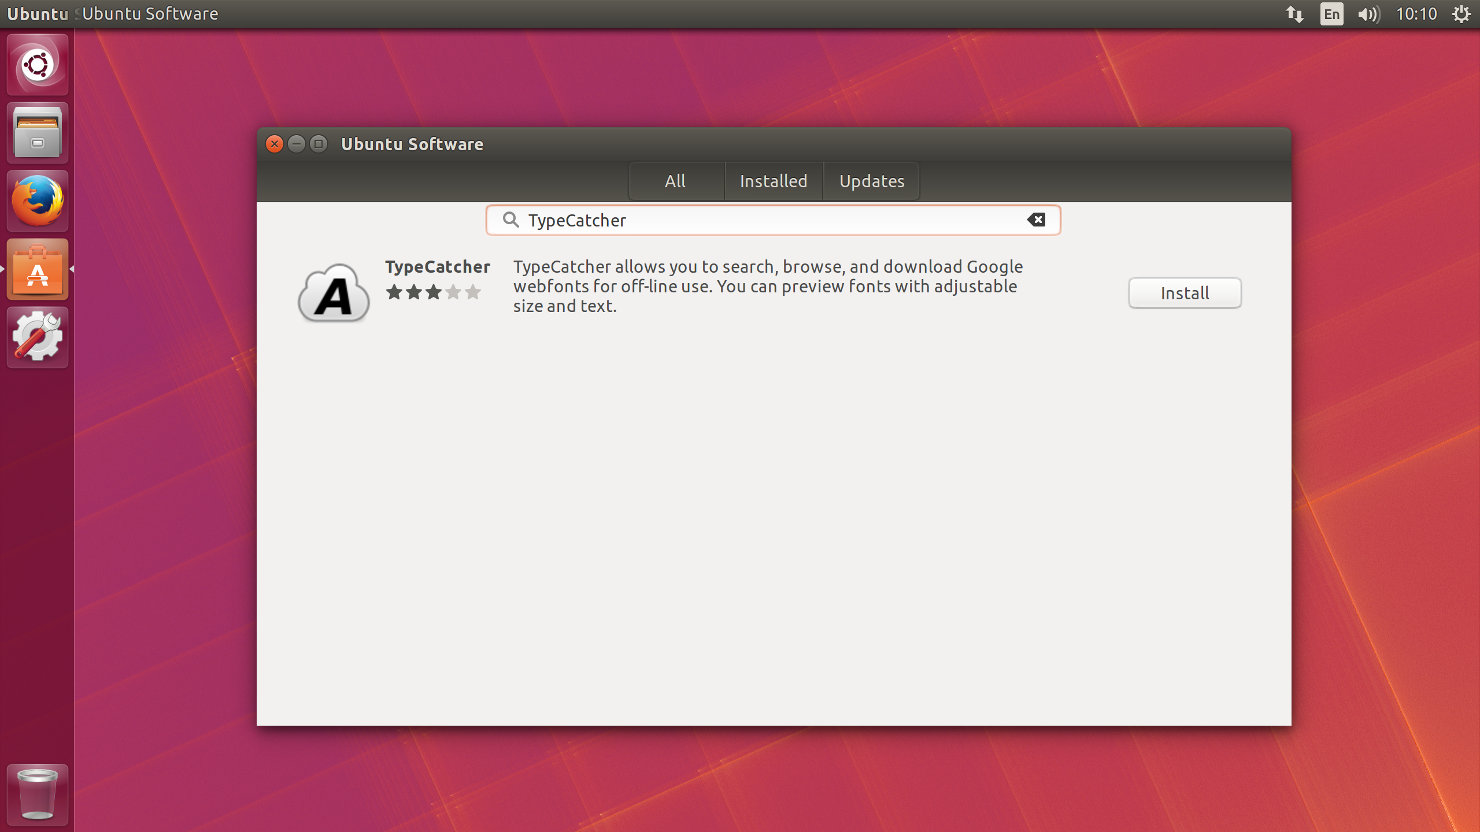 Screenshot of Ubuntu Software with TypeCatcher selected